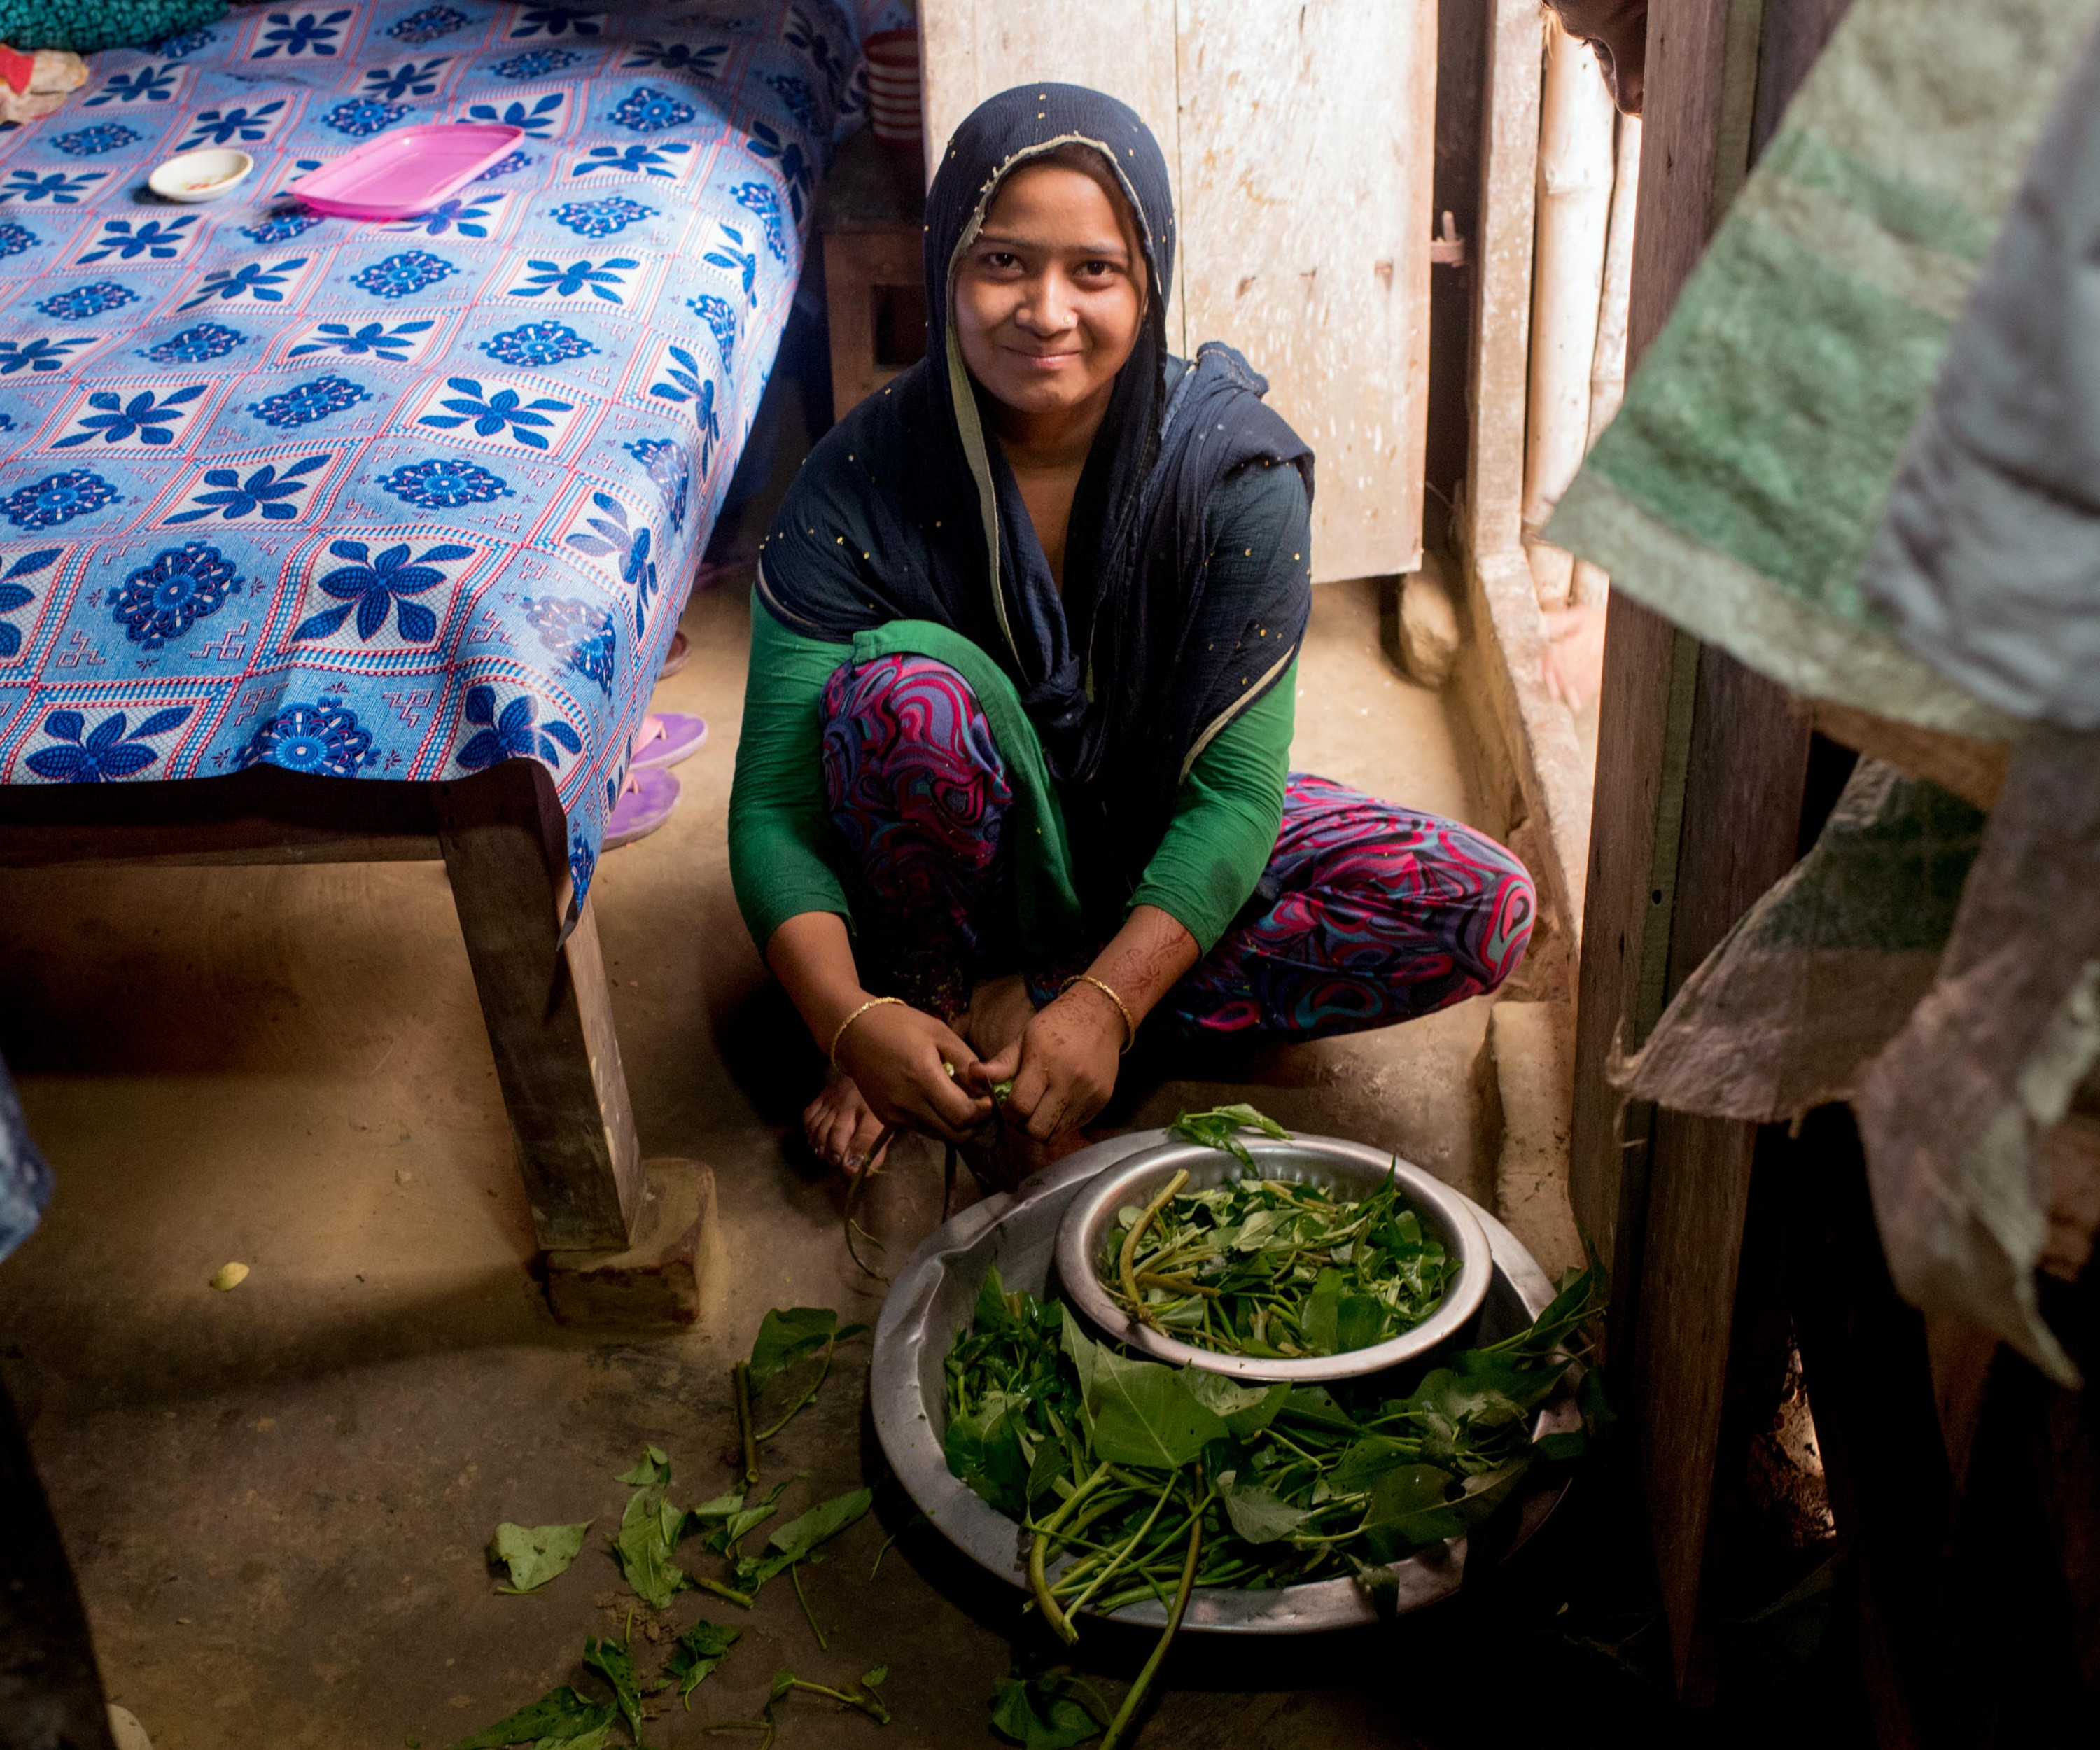 A Bangladeshi woman cuts vegetables inside her home.